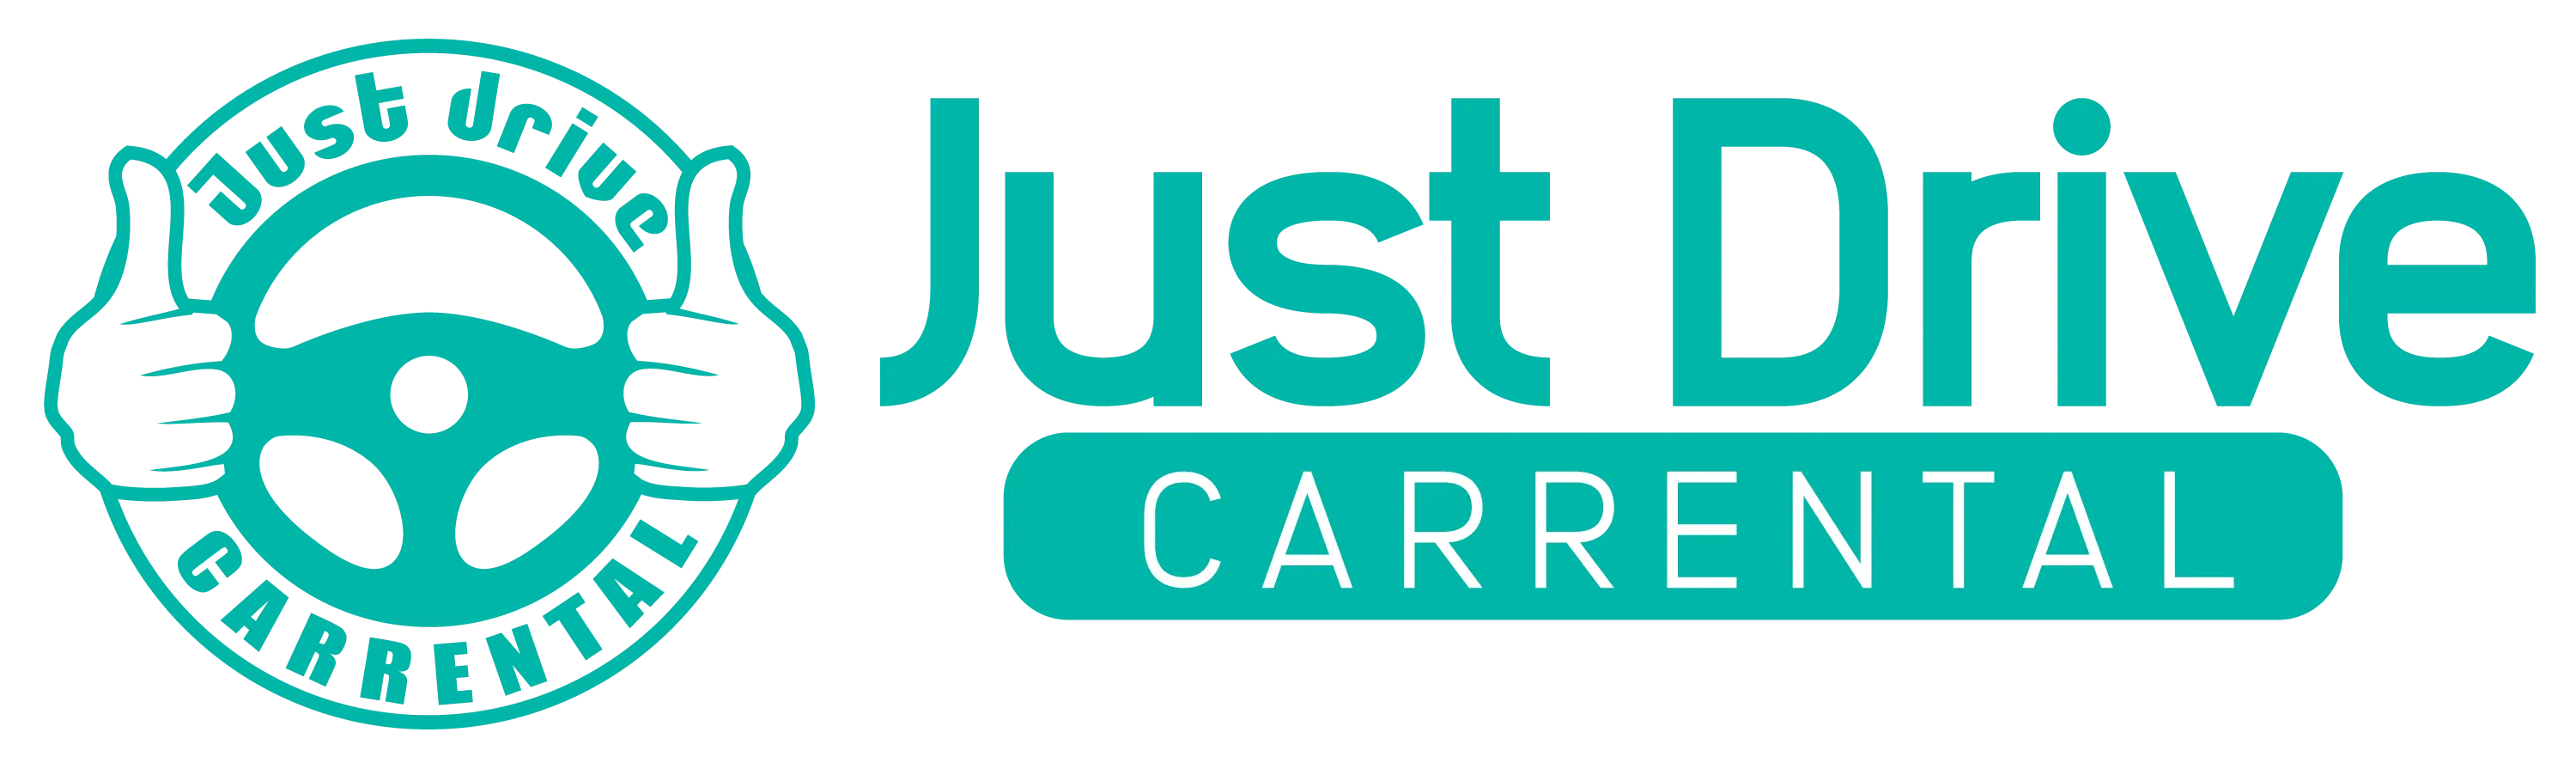 Just Drive Curacao Logo